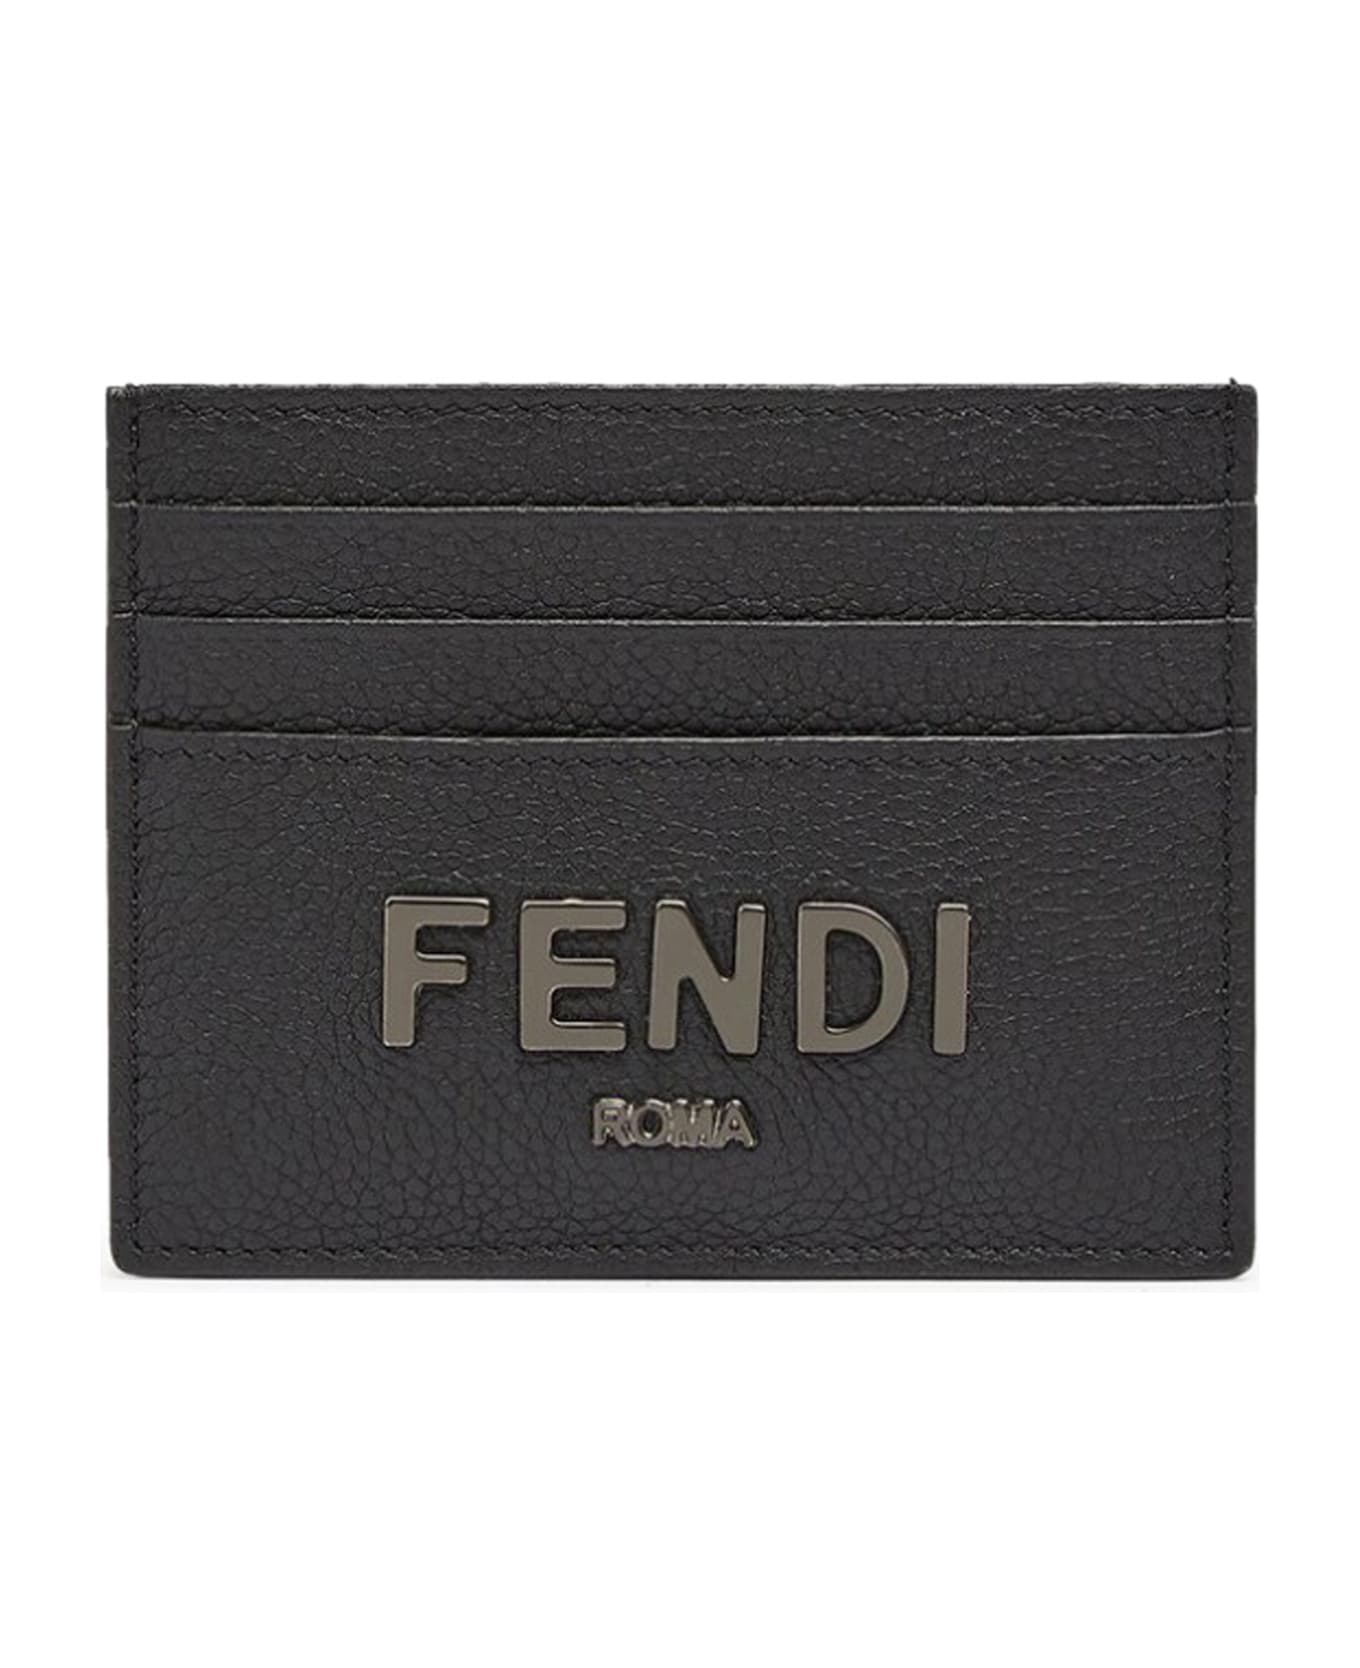 Fendi Card Case Vit.cher - Black Rubs